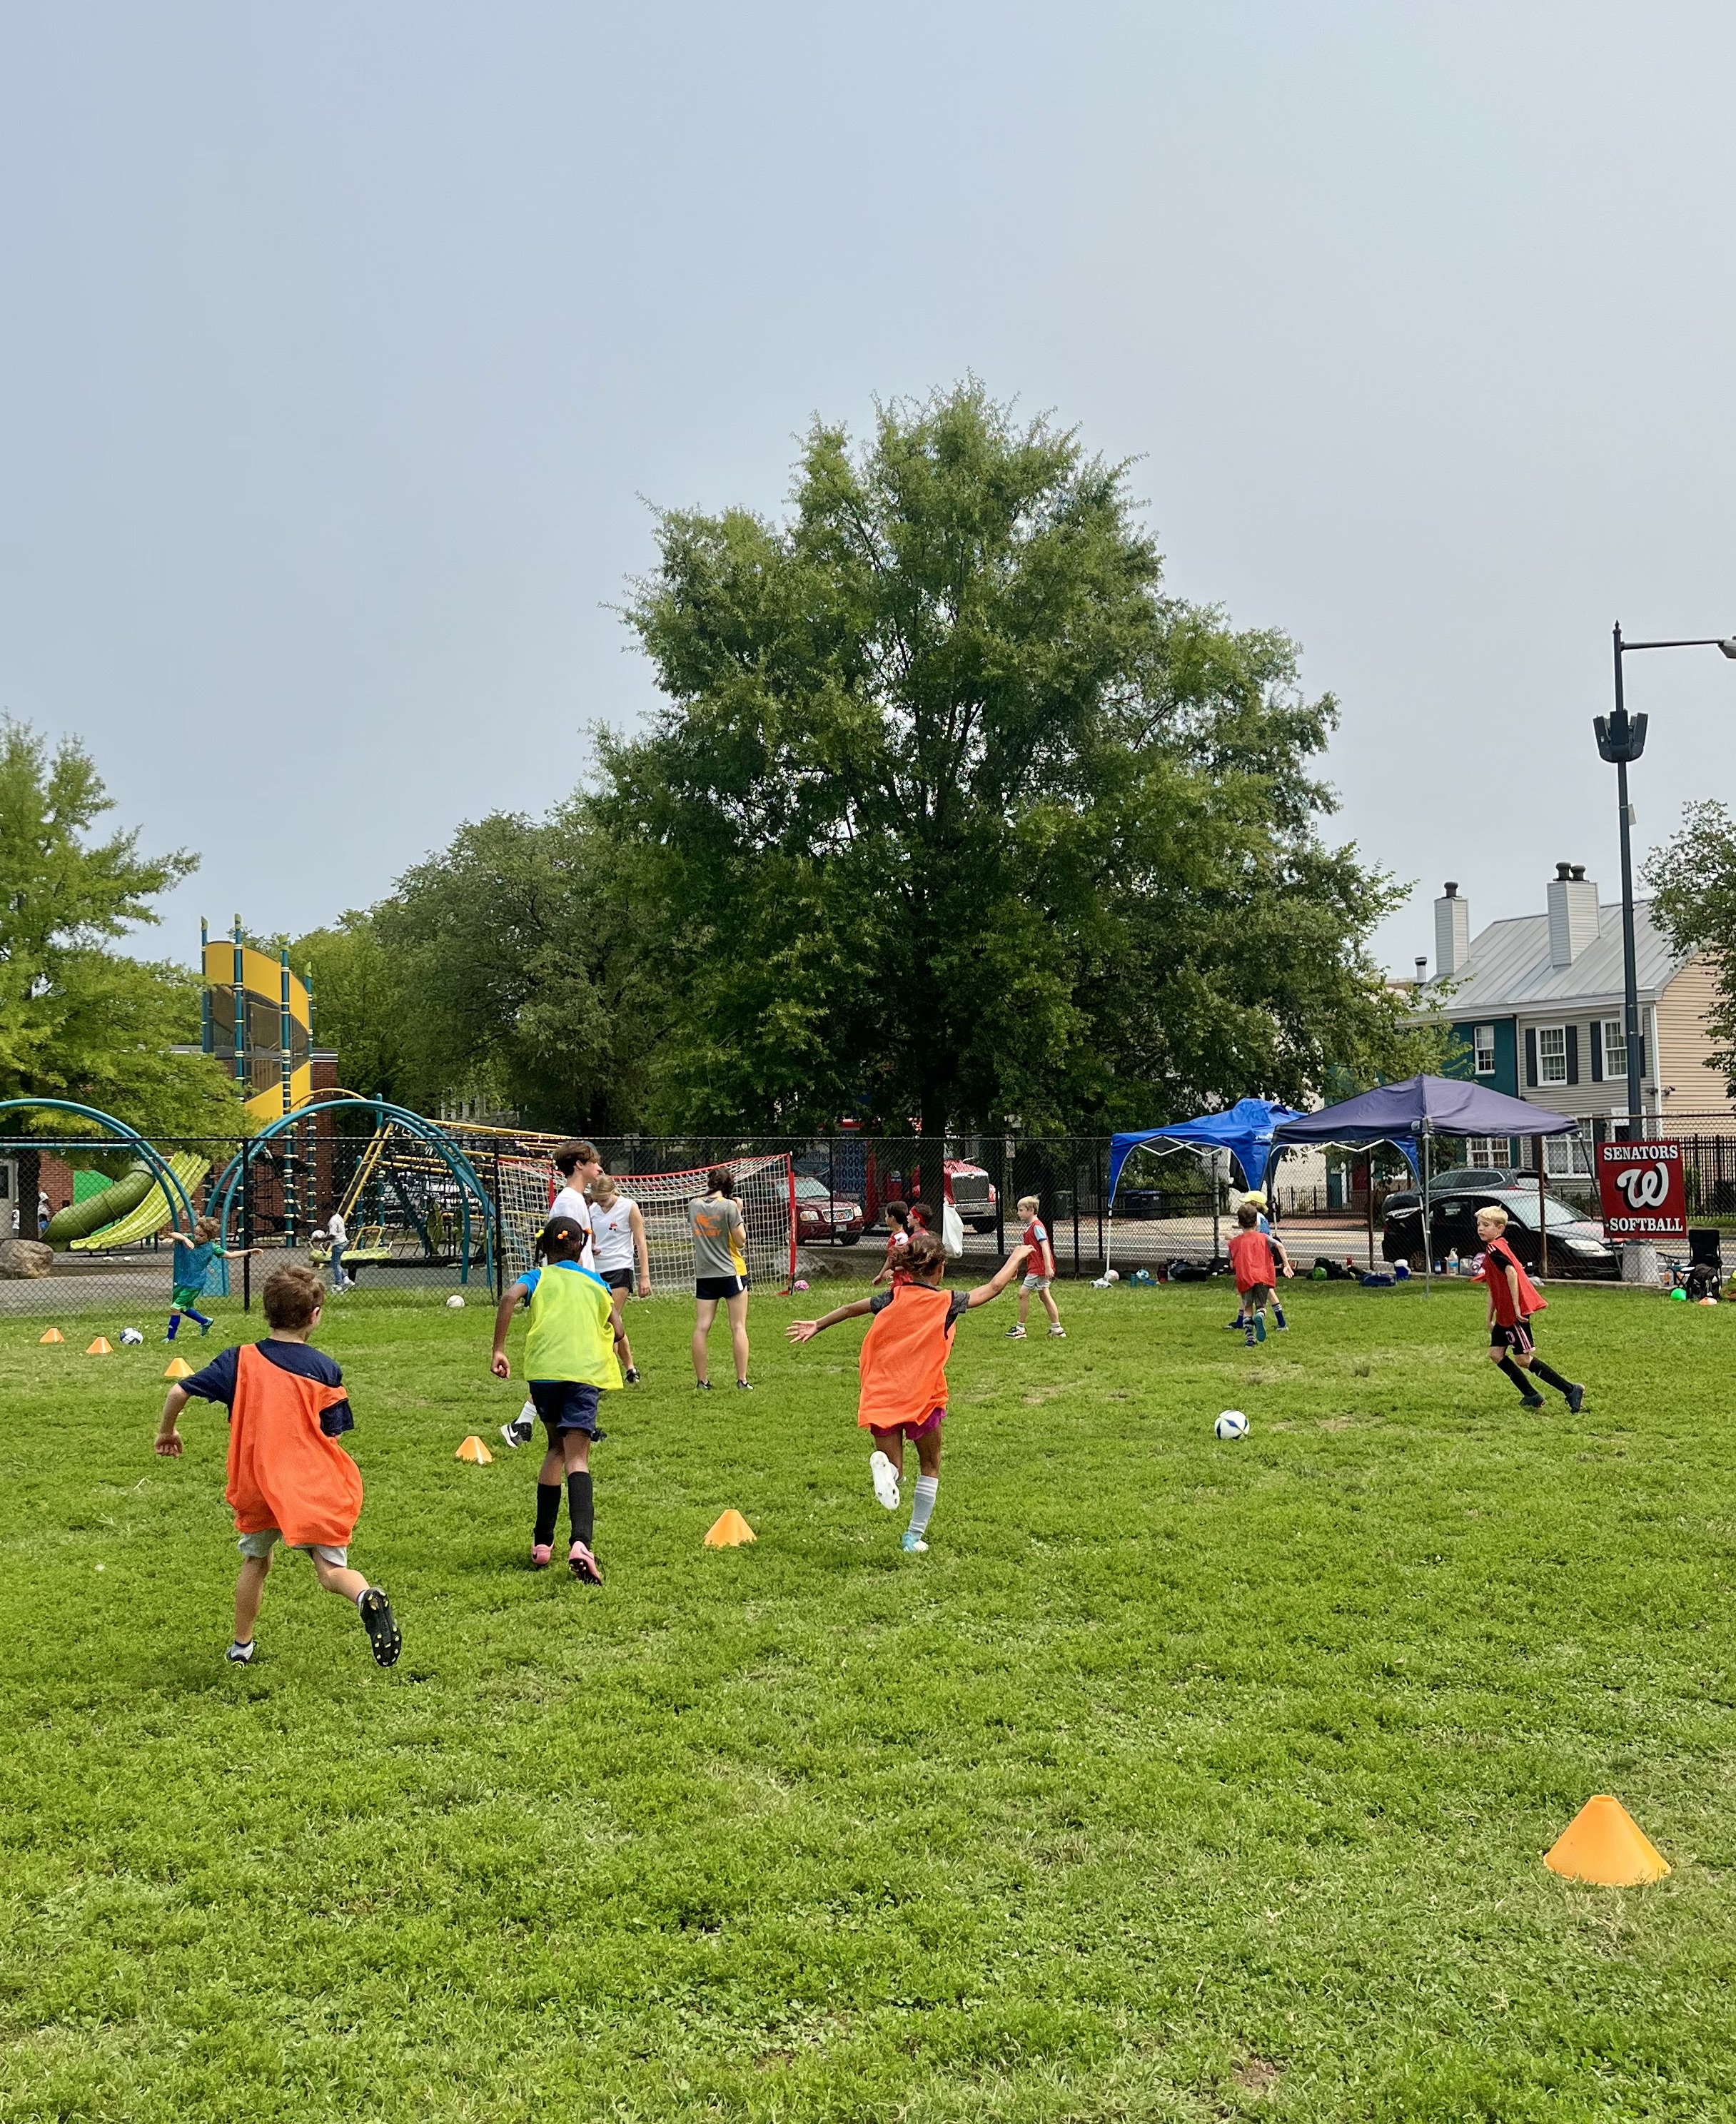 Dc-way-soccer-club-for-kids-in-washington-dc-summer-camp-at-tyler-elementary-school- 9231.jpeg